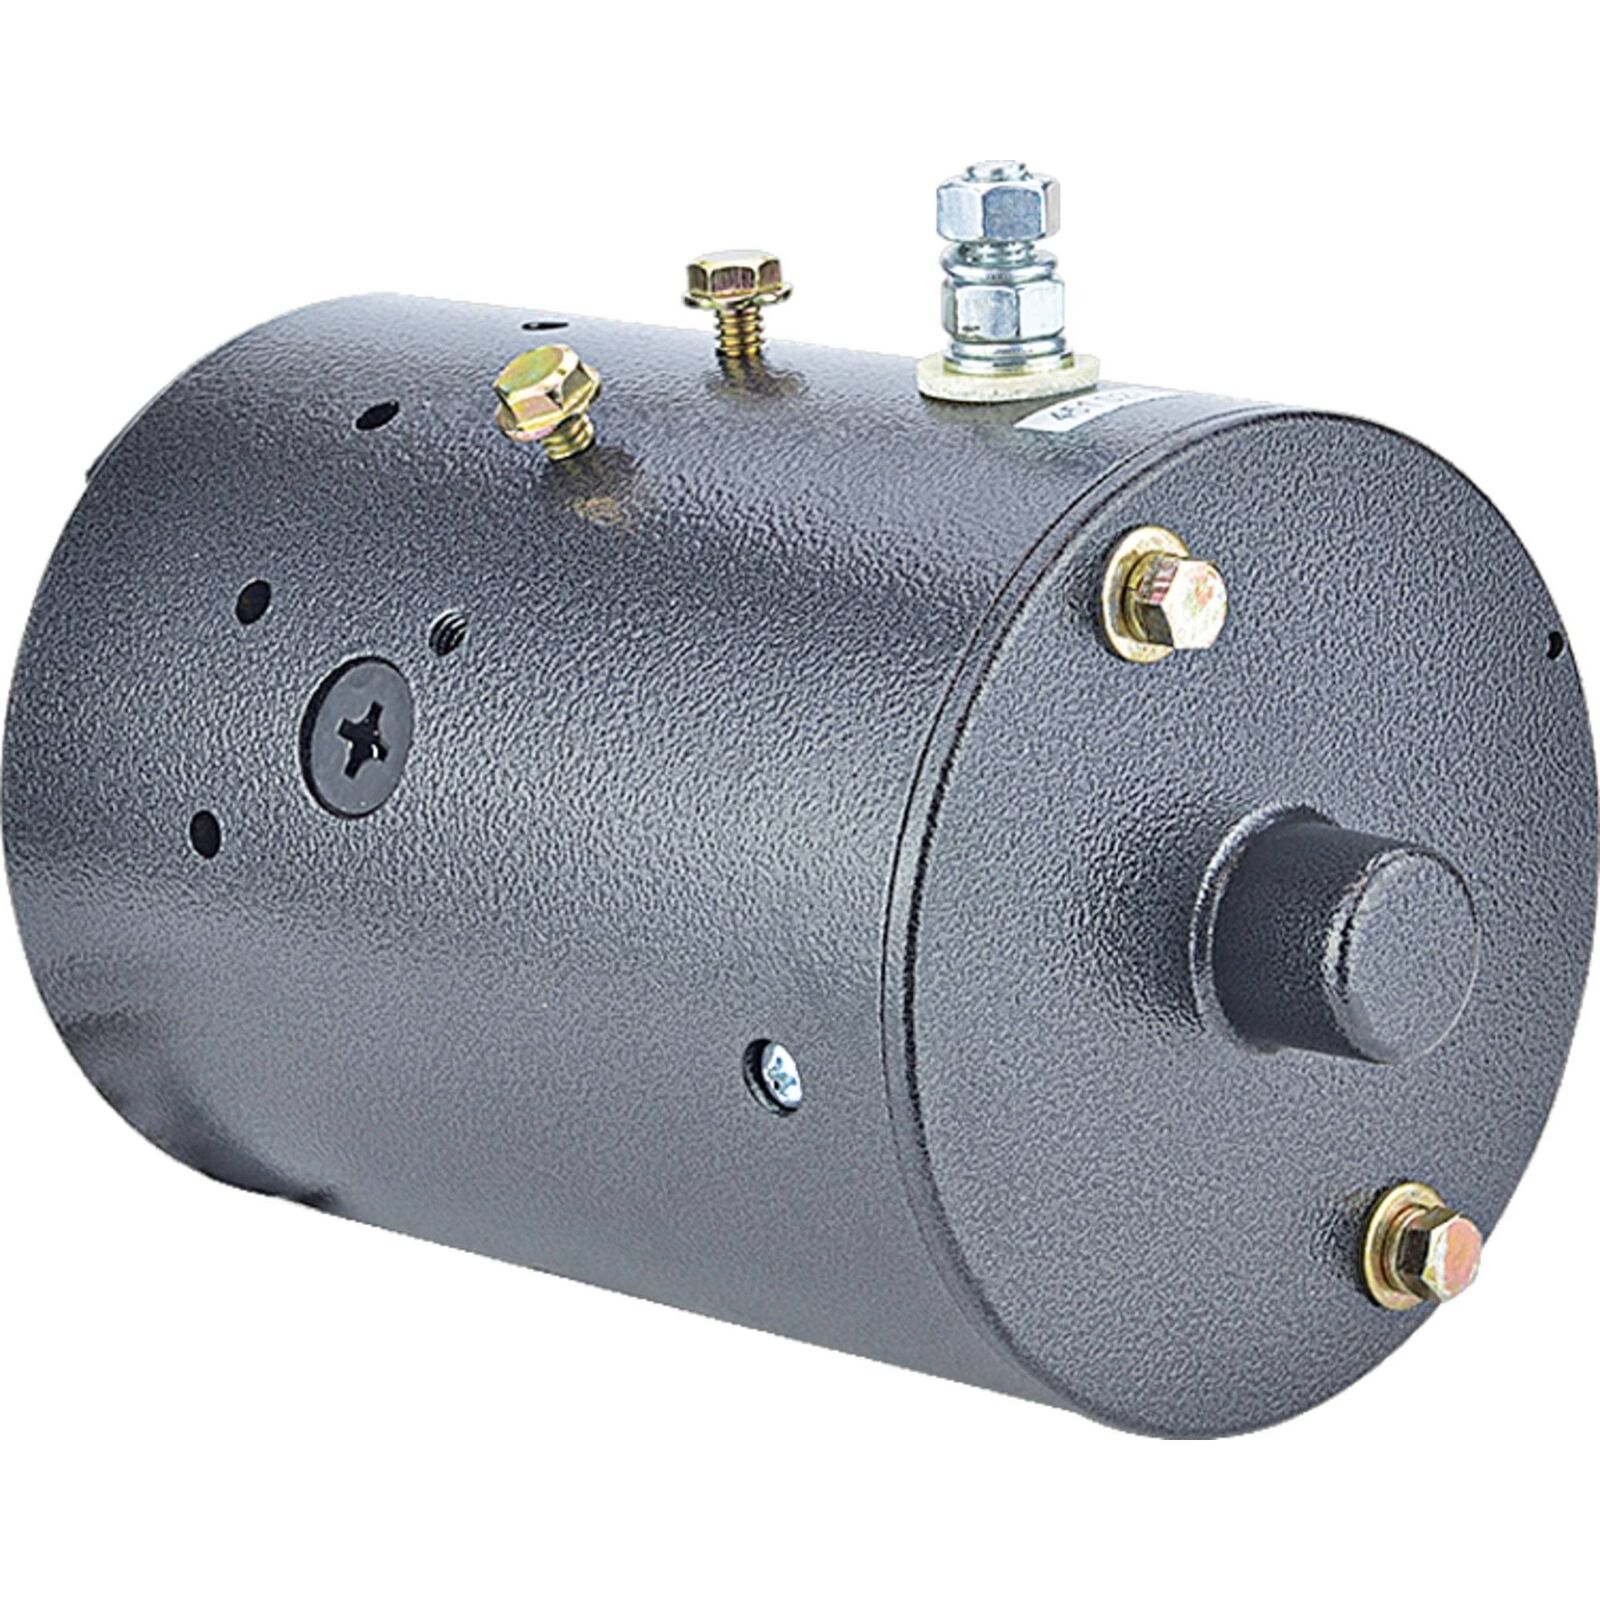 DB+Electrical+LPL0032+Pump+Motor for sale online | eBay